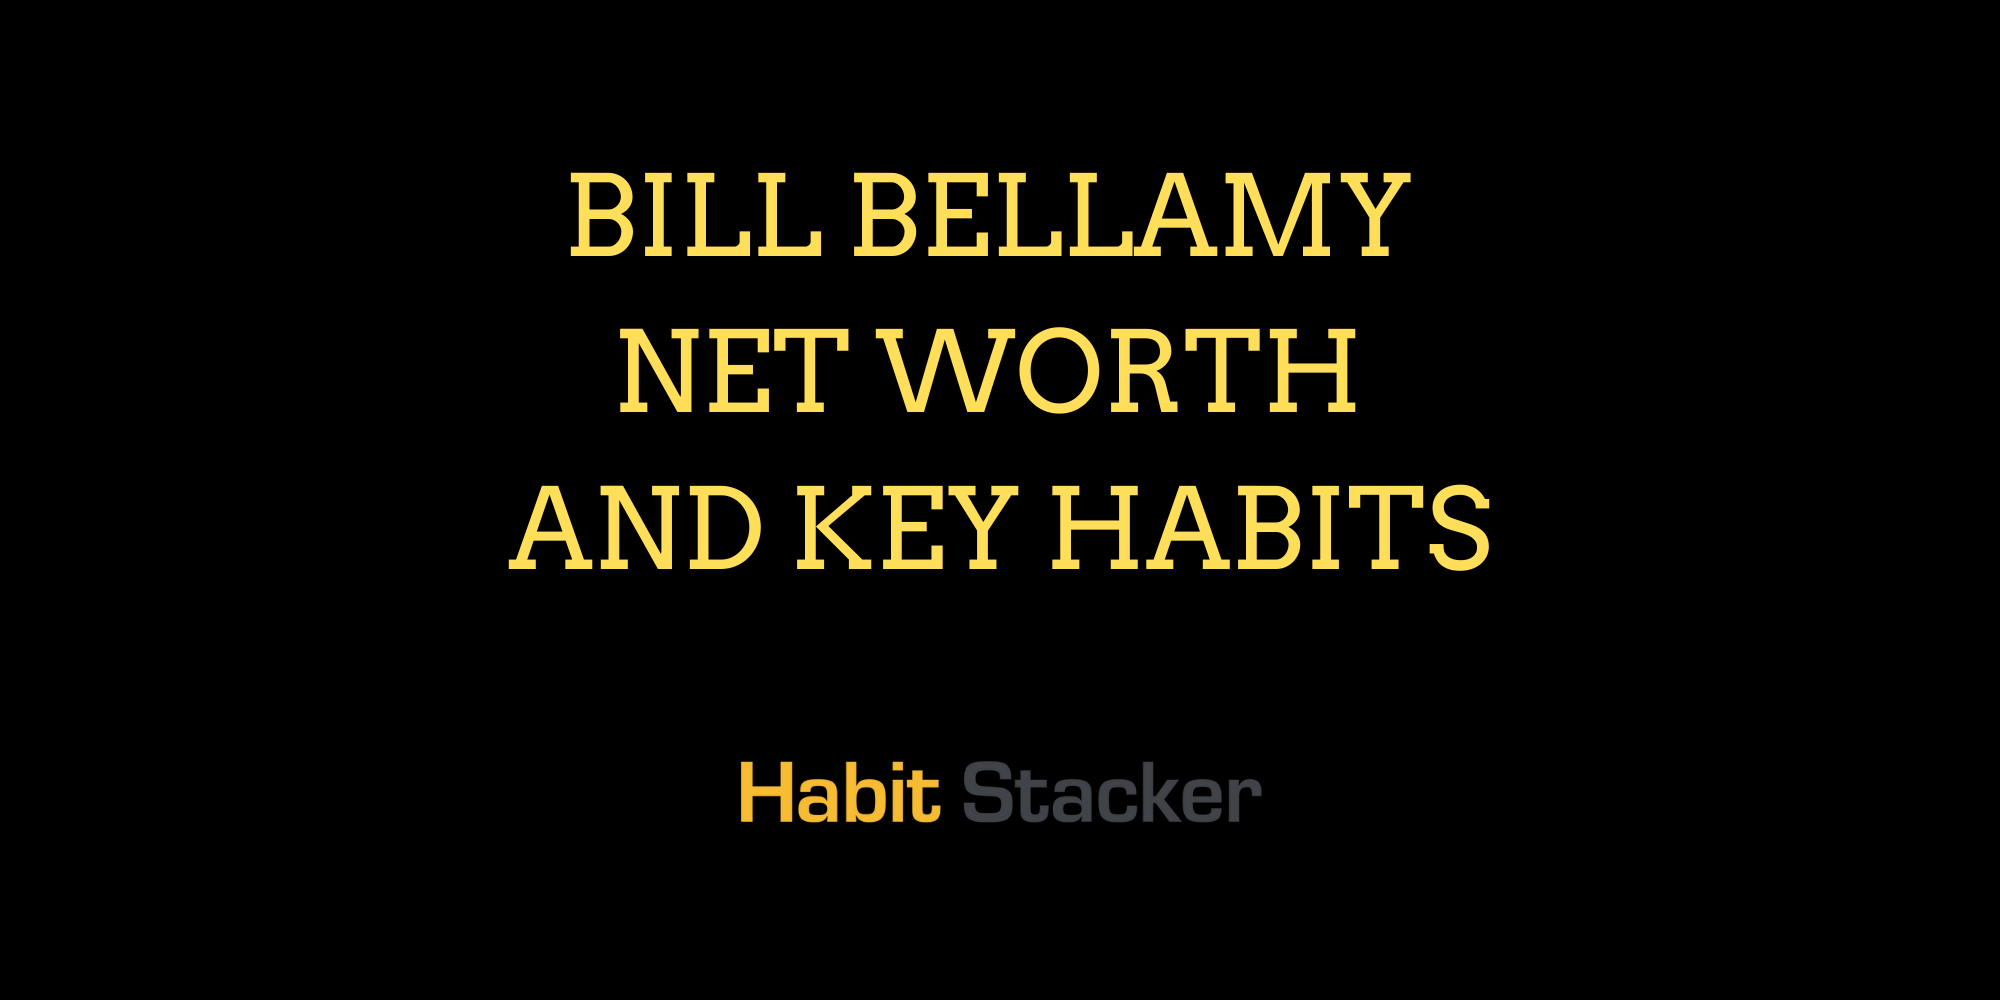 Bill Bellamy Net Worth and Key Habits